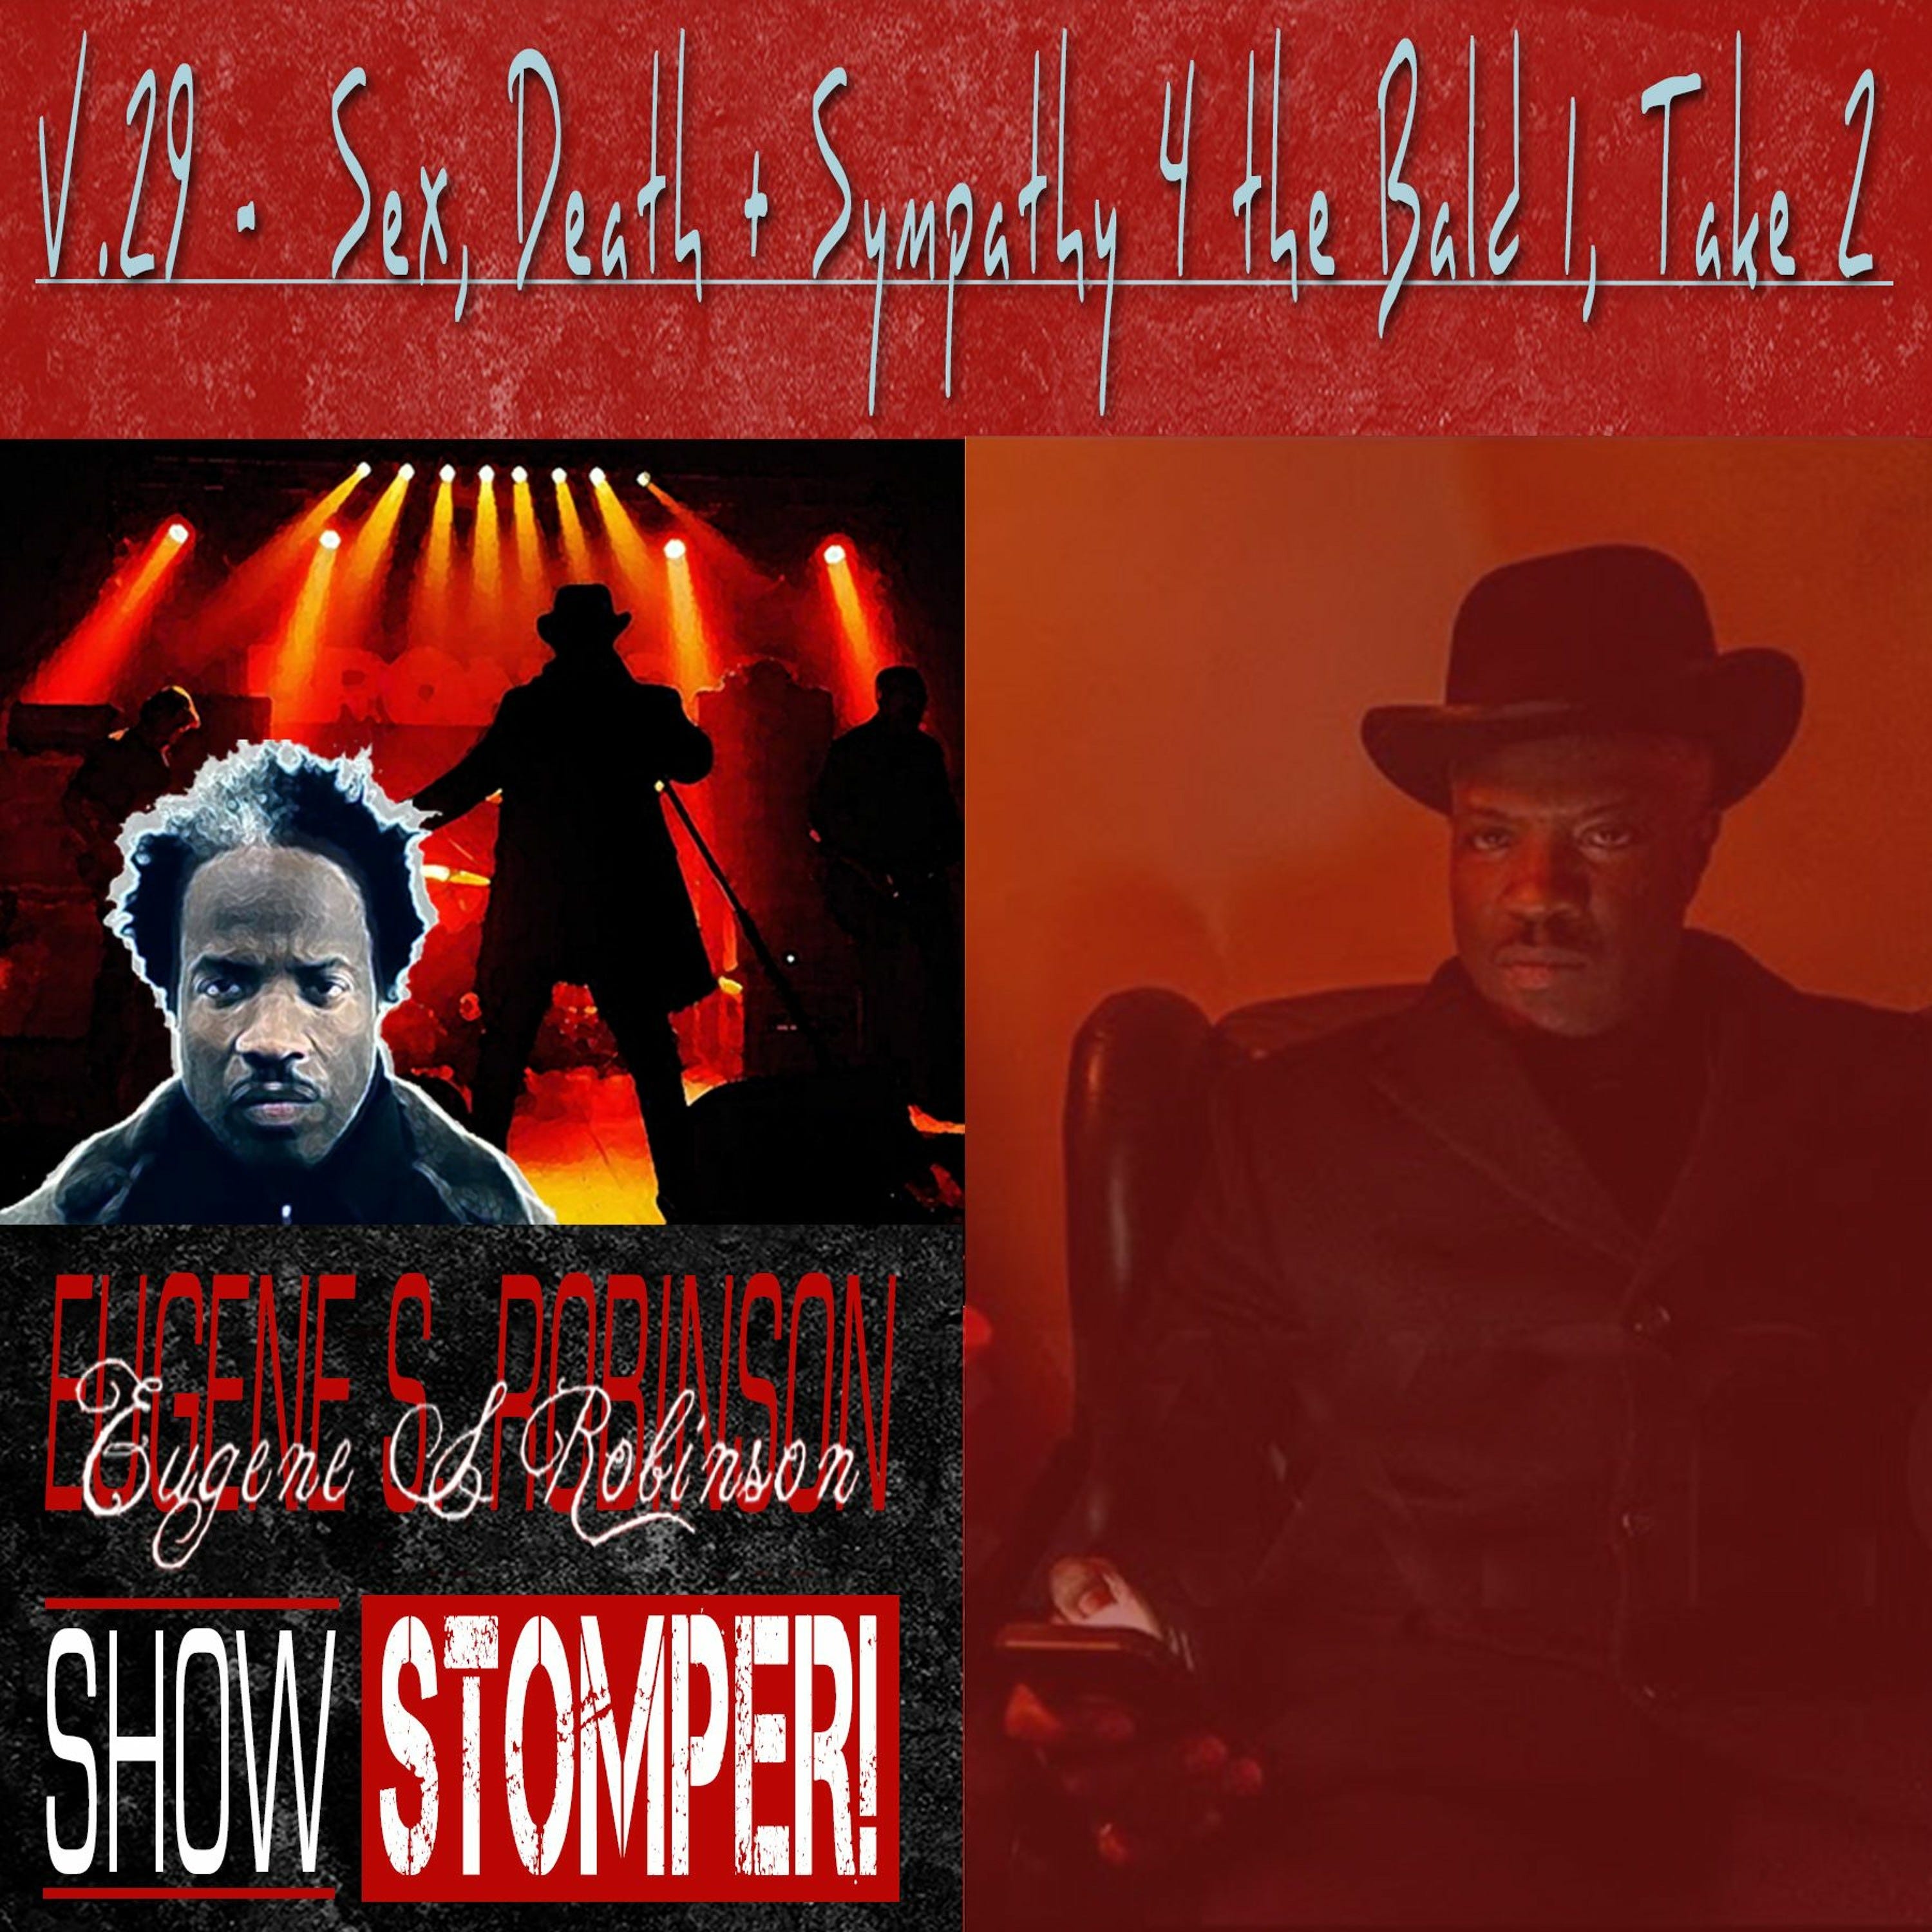 The Eugene S. Robinson Show Stomper! V.29 - Sex Death + Sympathy 4 The Bald 1 Take 2